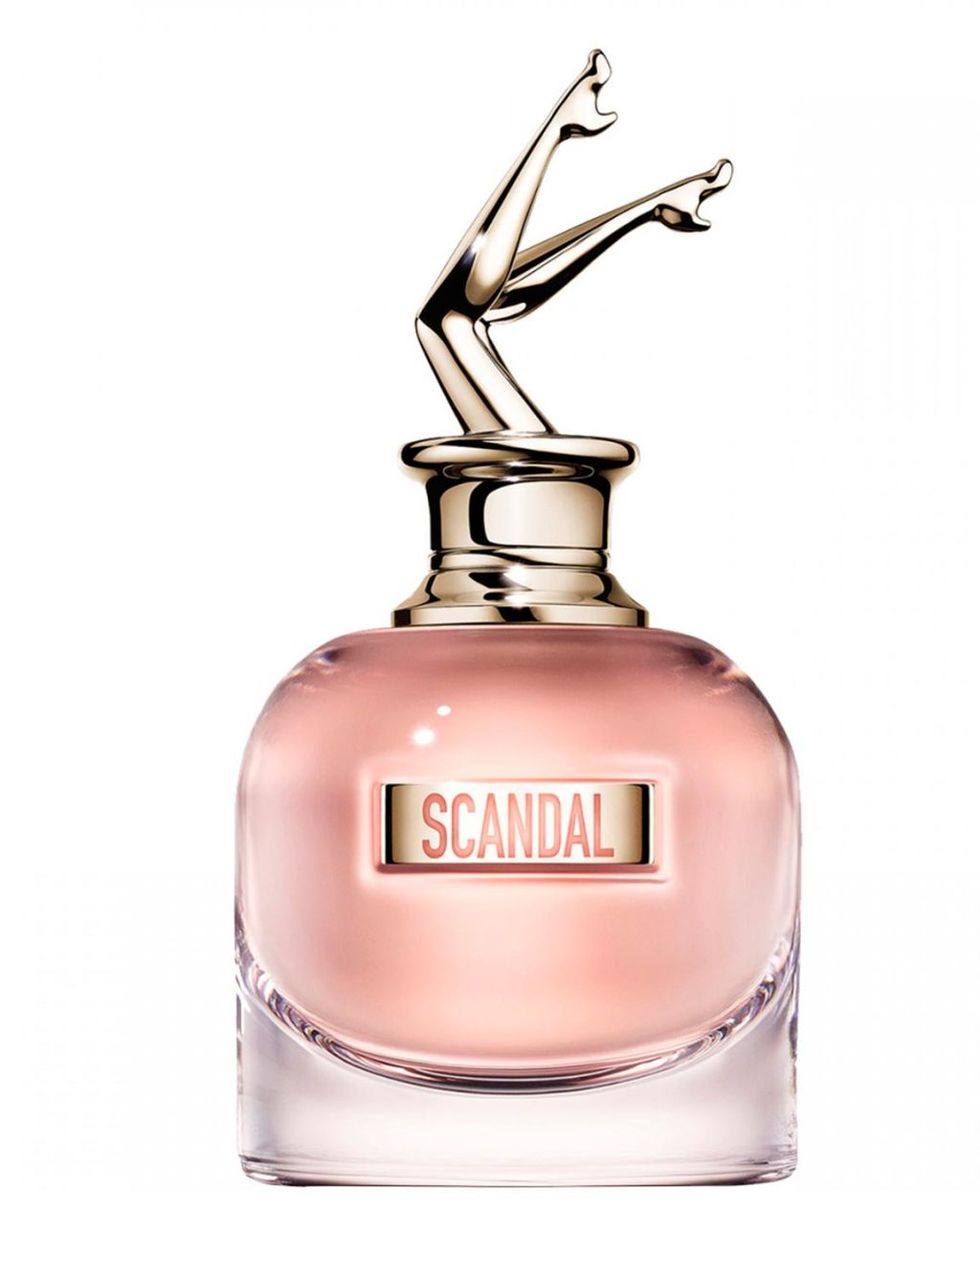 Perfume, Product, Cosmetics, Liquid, Bottle, Peach, Hand, Fluid, Glass bottle, Metal, 